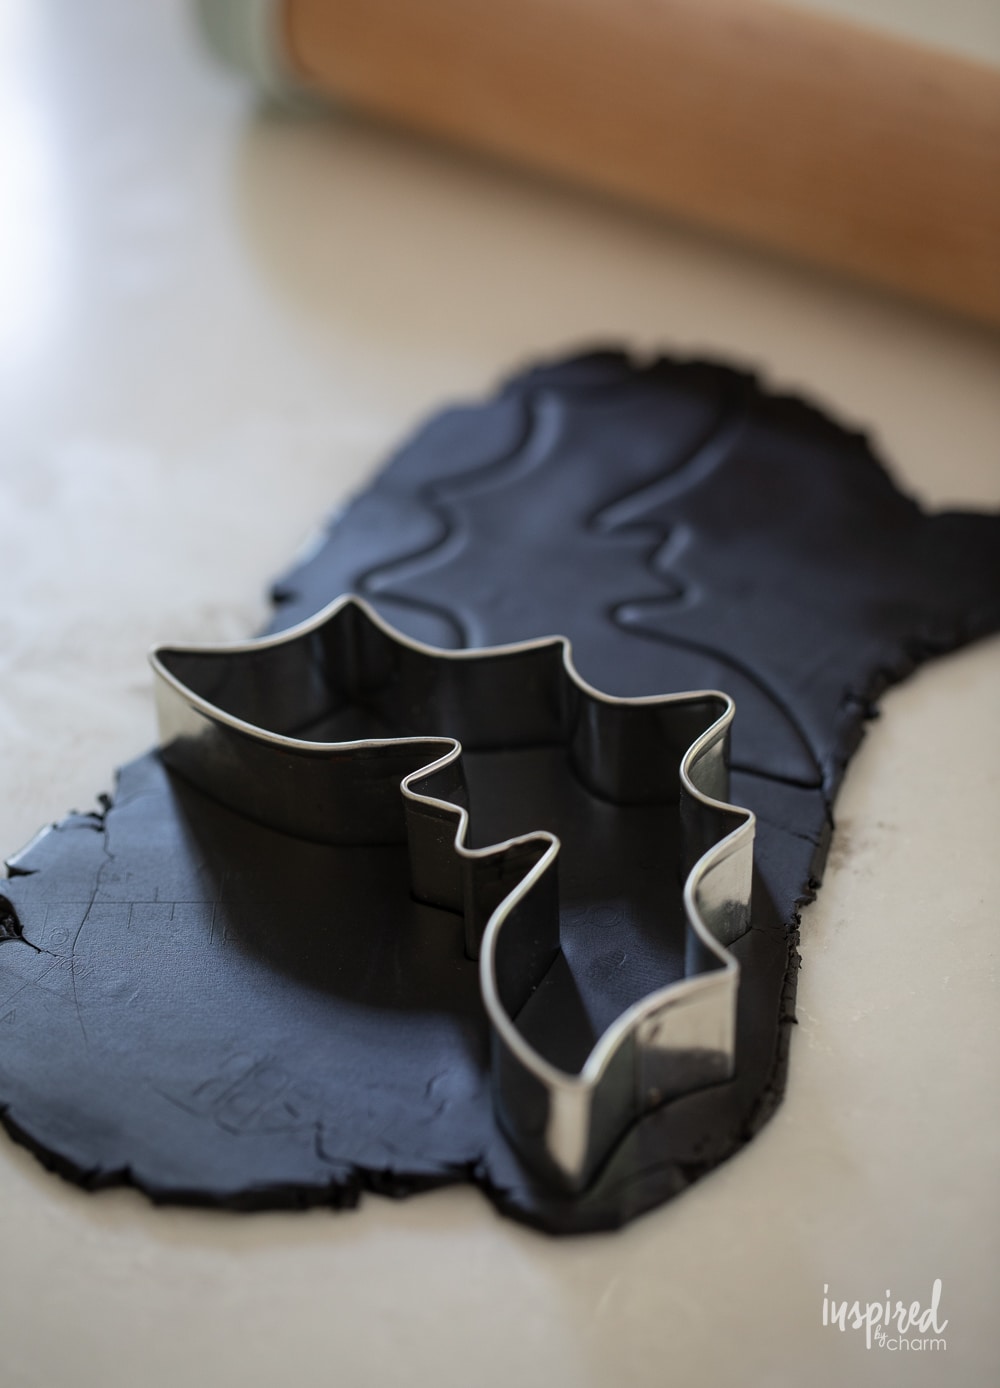 bat cookie cutter cutting black oven-bake clay.